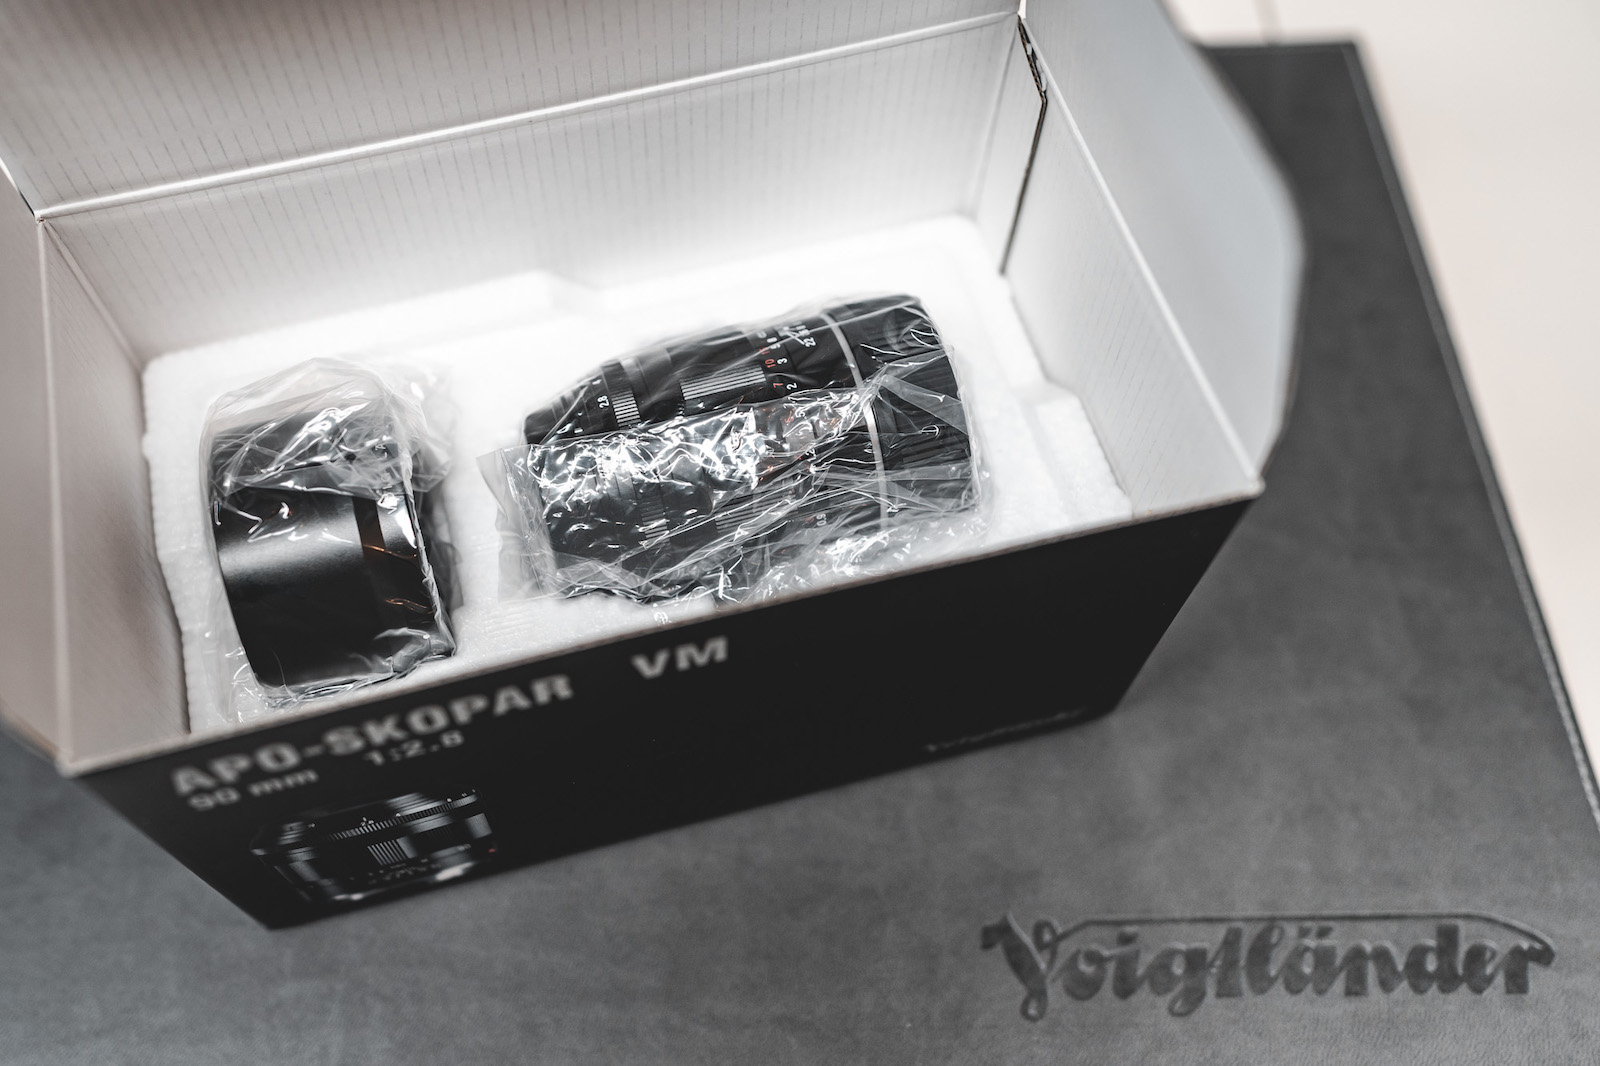 The new silver Voigtlander APO-SKOPAR 90mm f/2.8 VM lens for Leica M